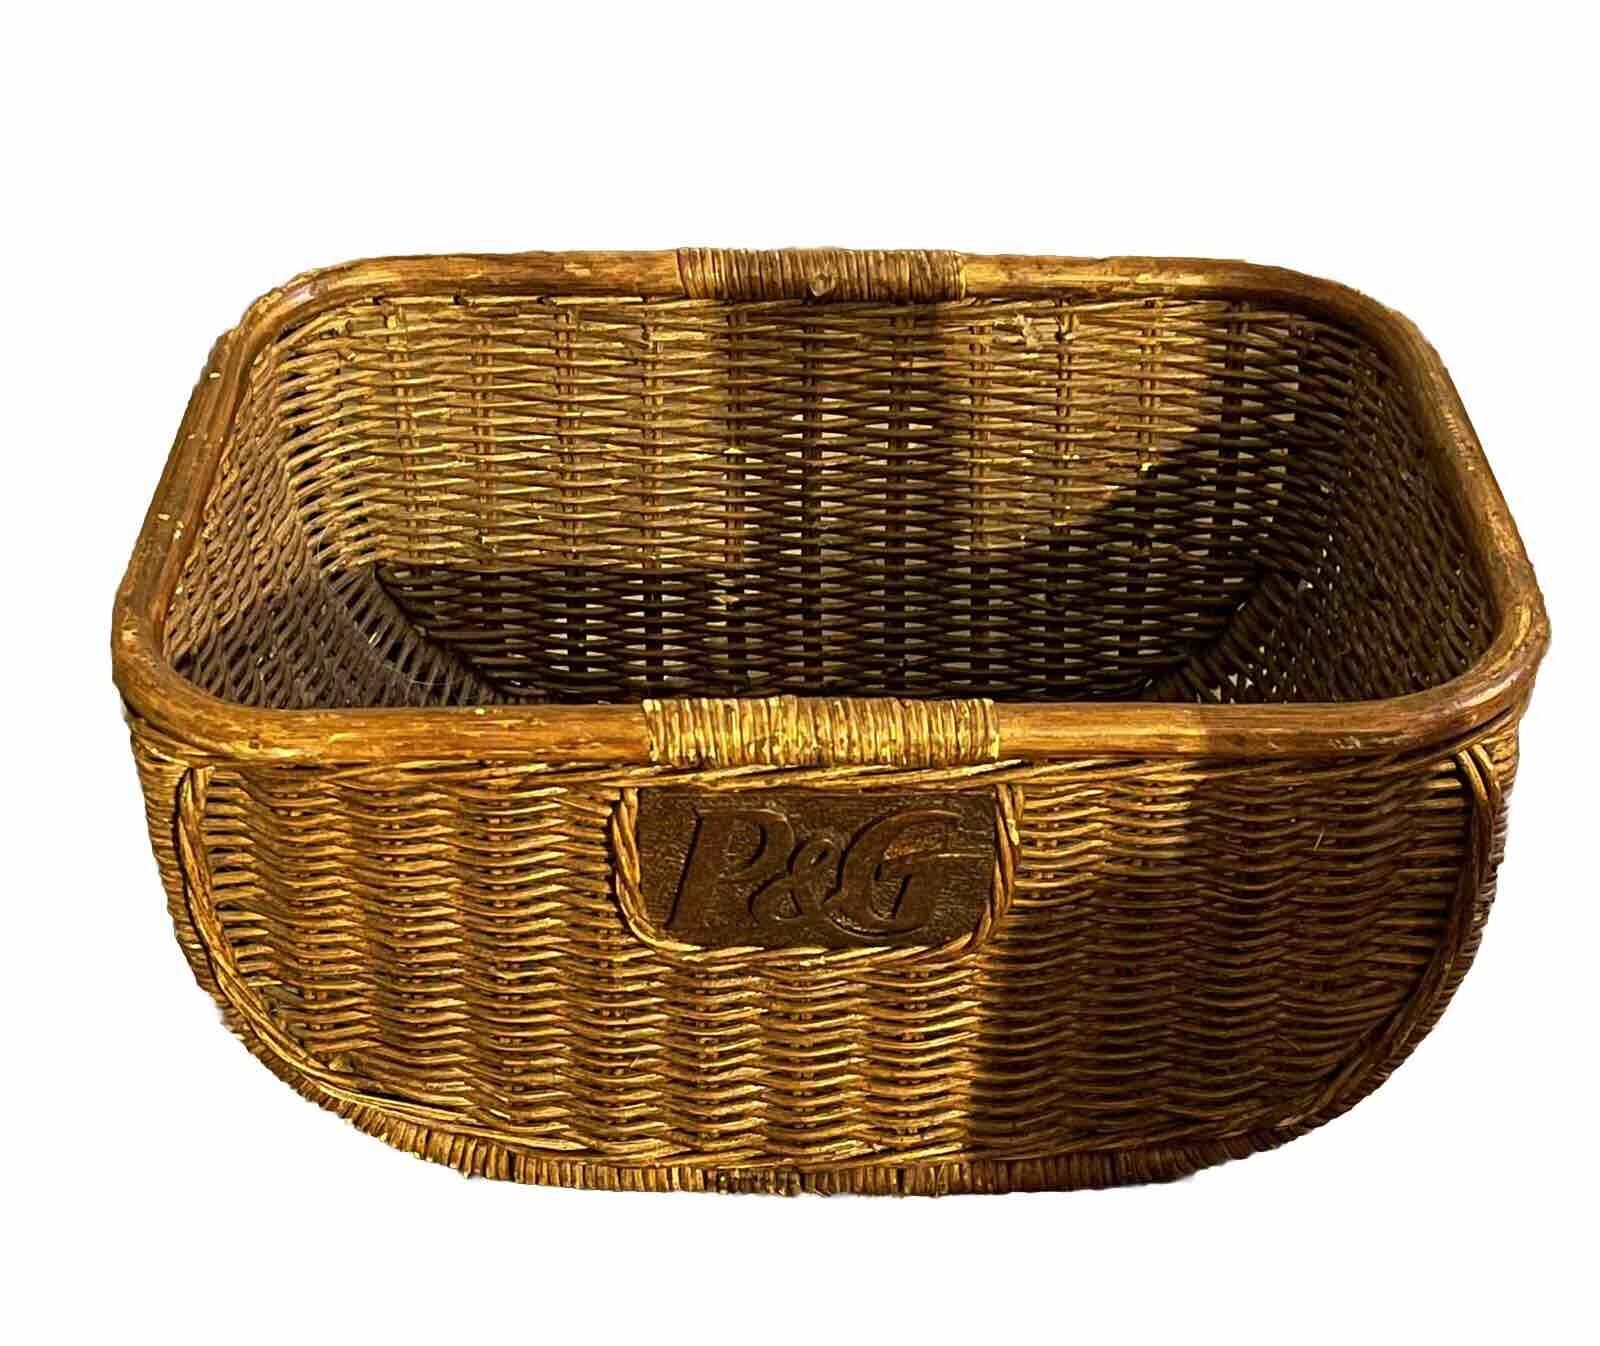 Old Vintage Proctor & Gamble P&G Wicker Advertising Basket